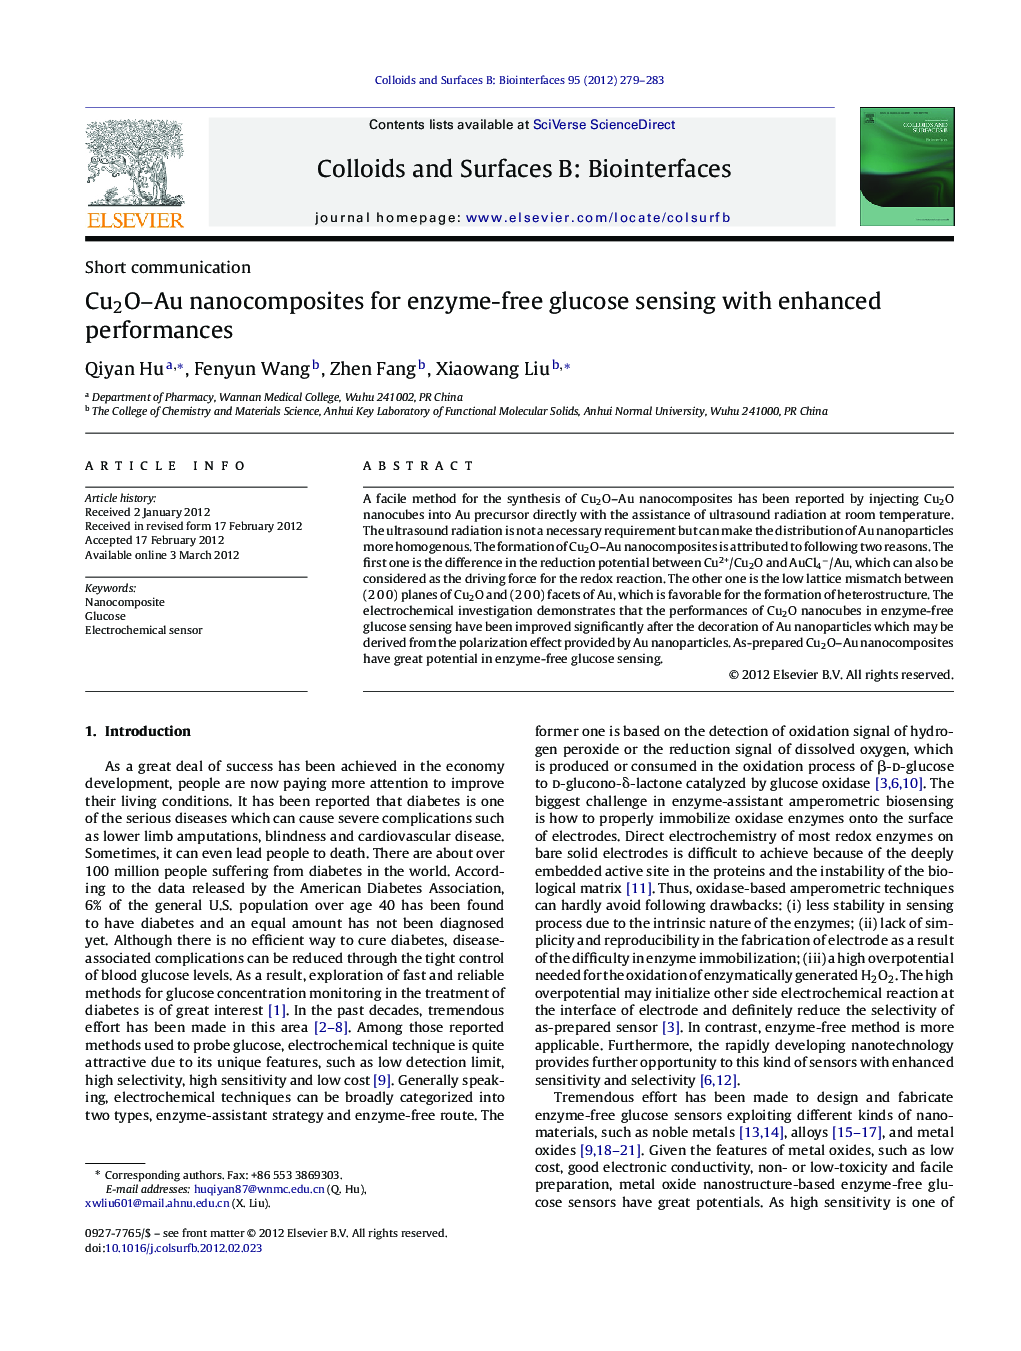 Cu2O-Au nanocomposites for enzyme-free glucose sensing with enhanced performances